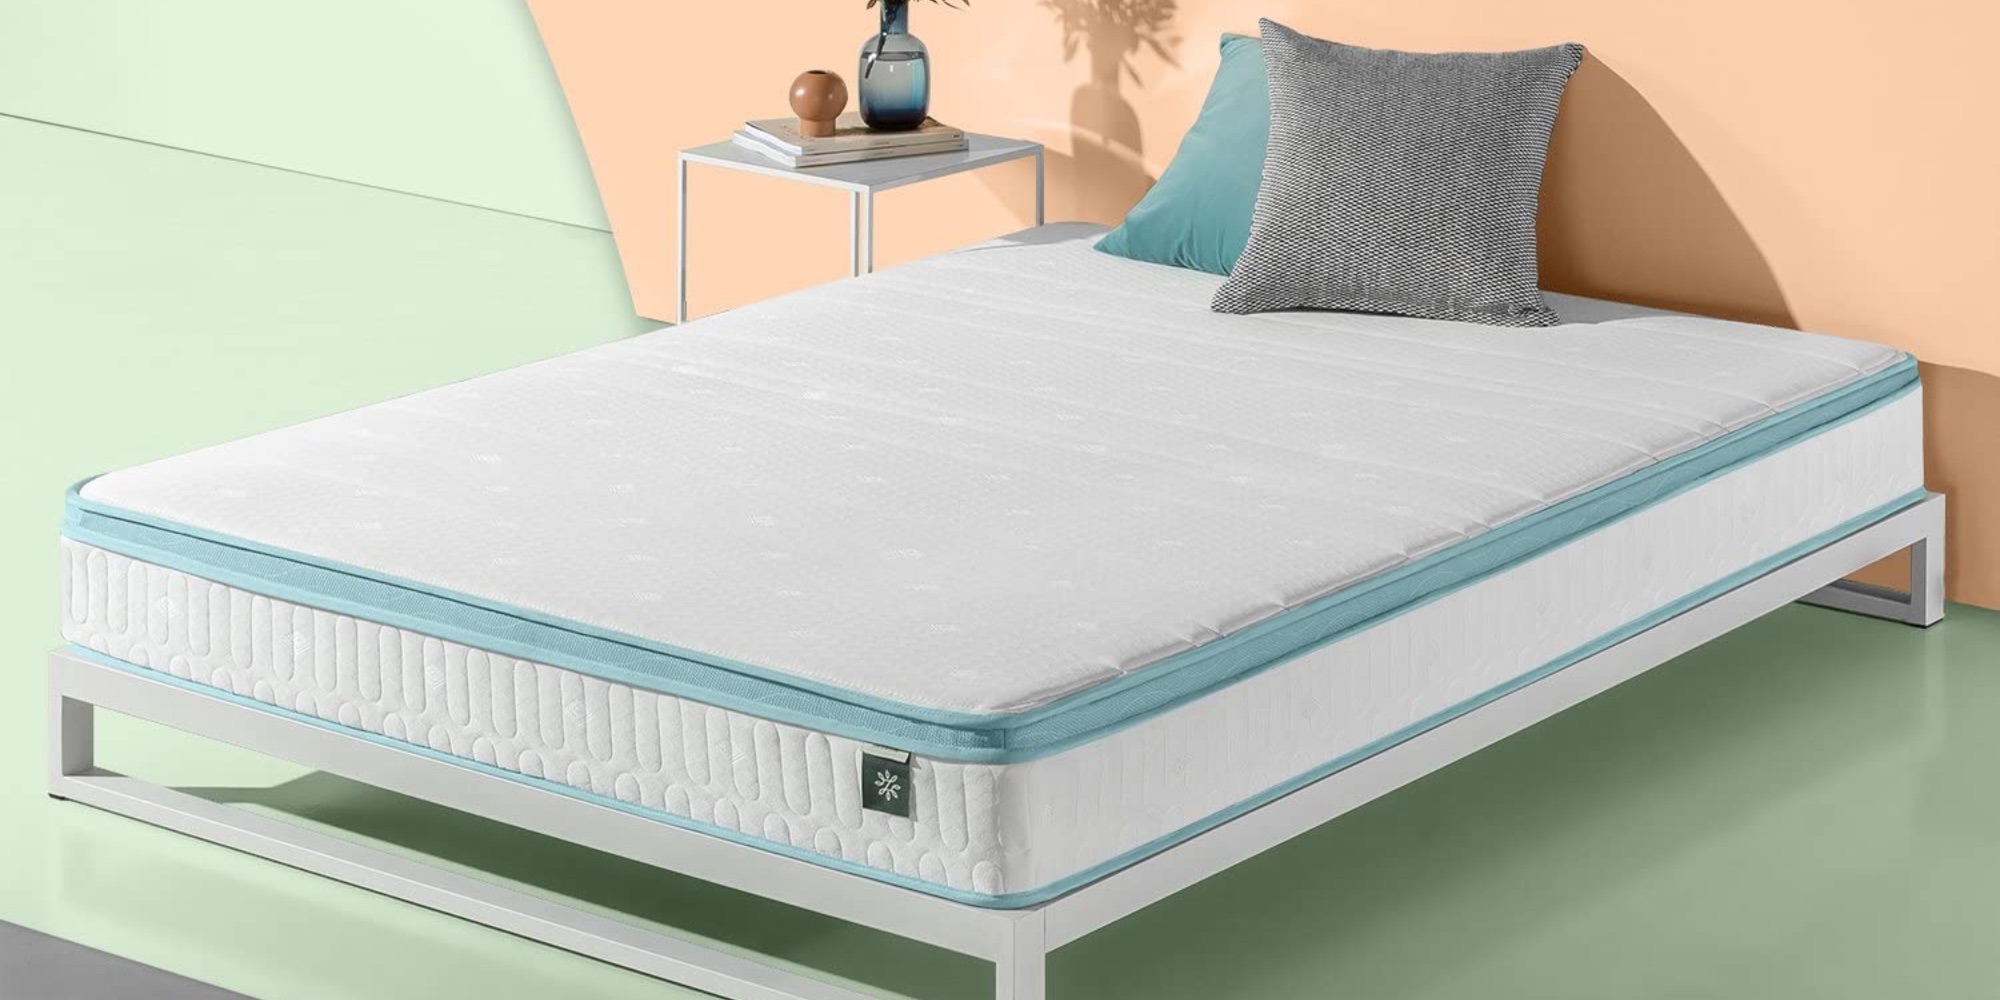 zinus 8 inch mattress review